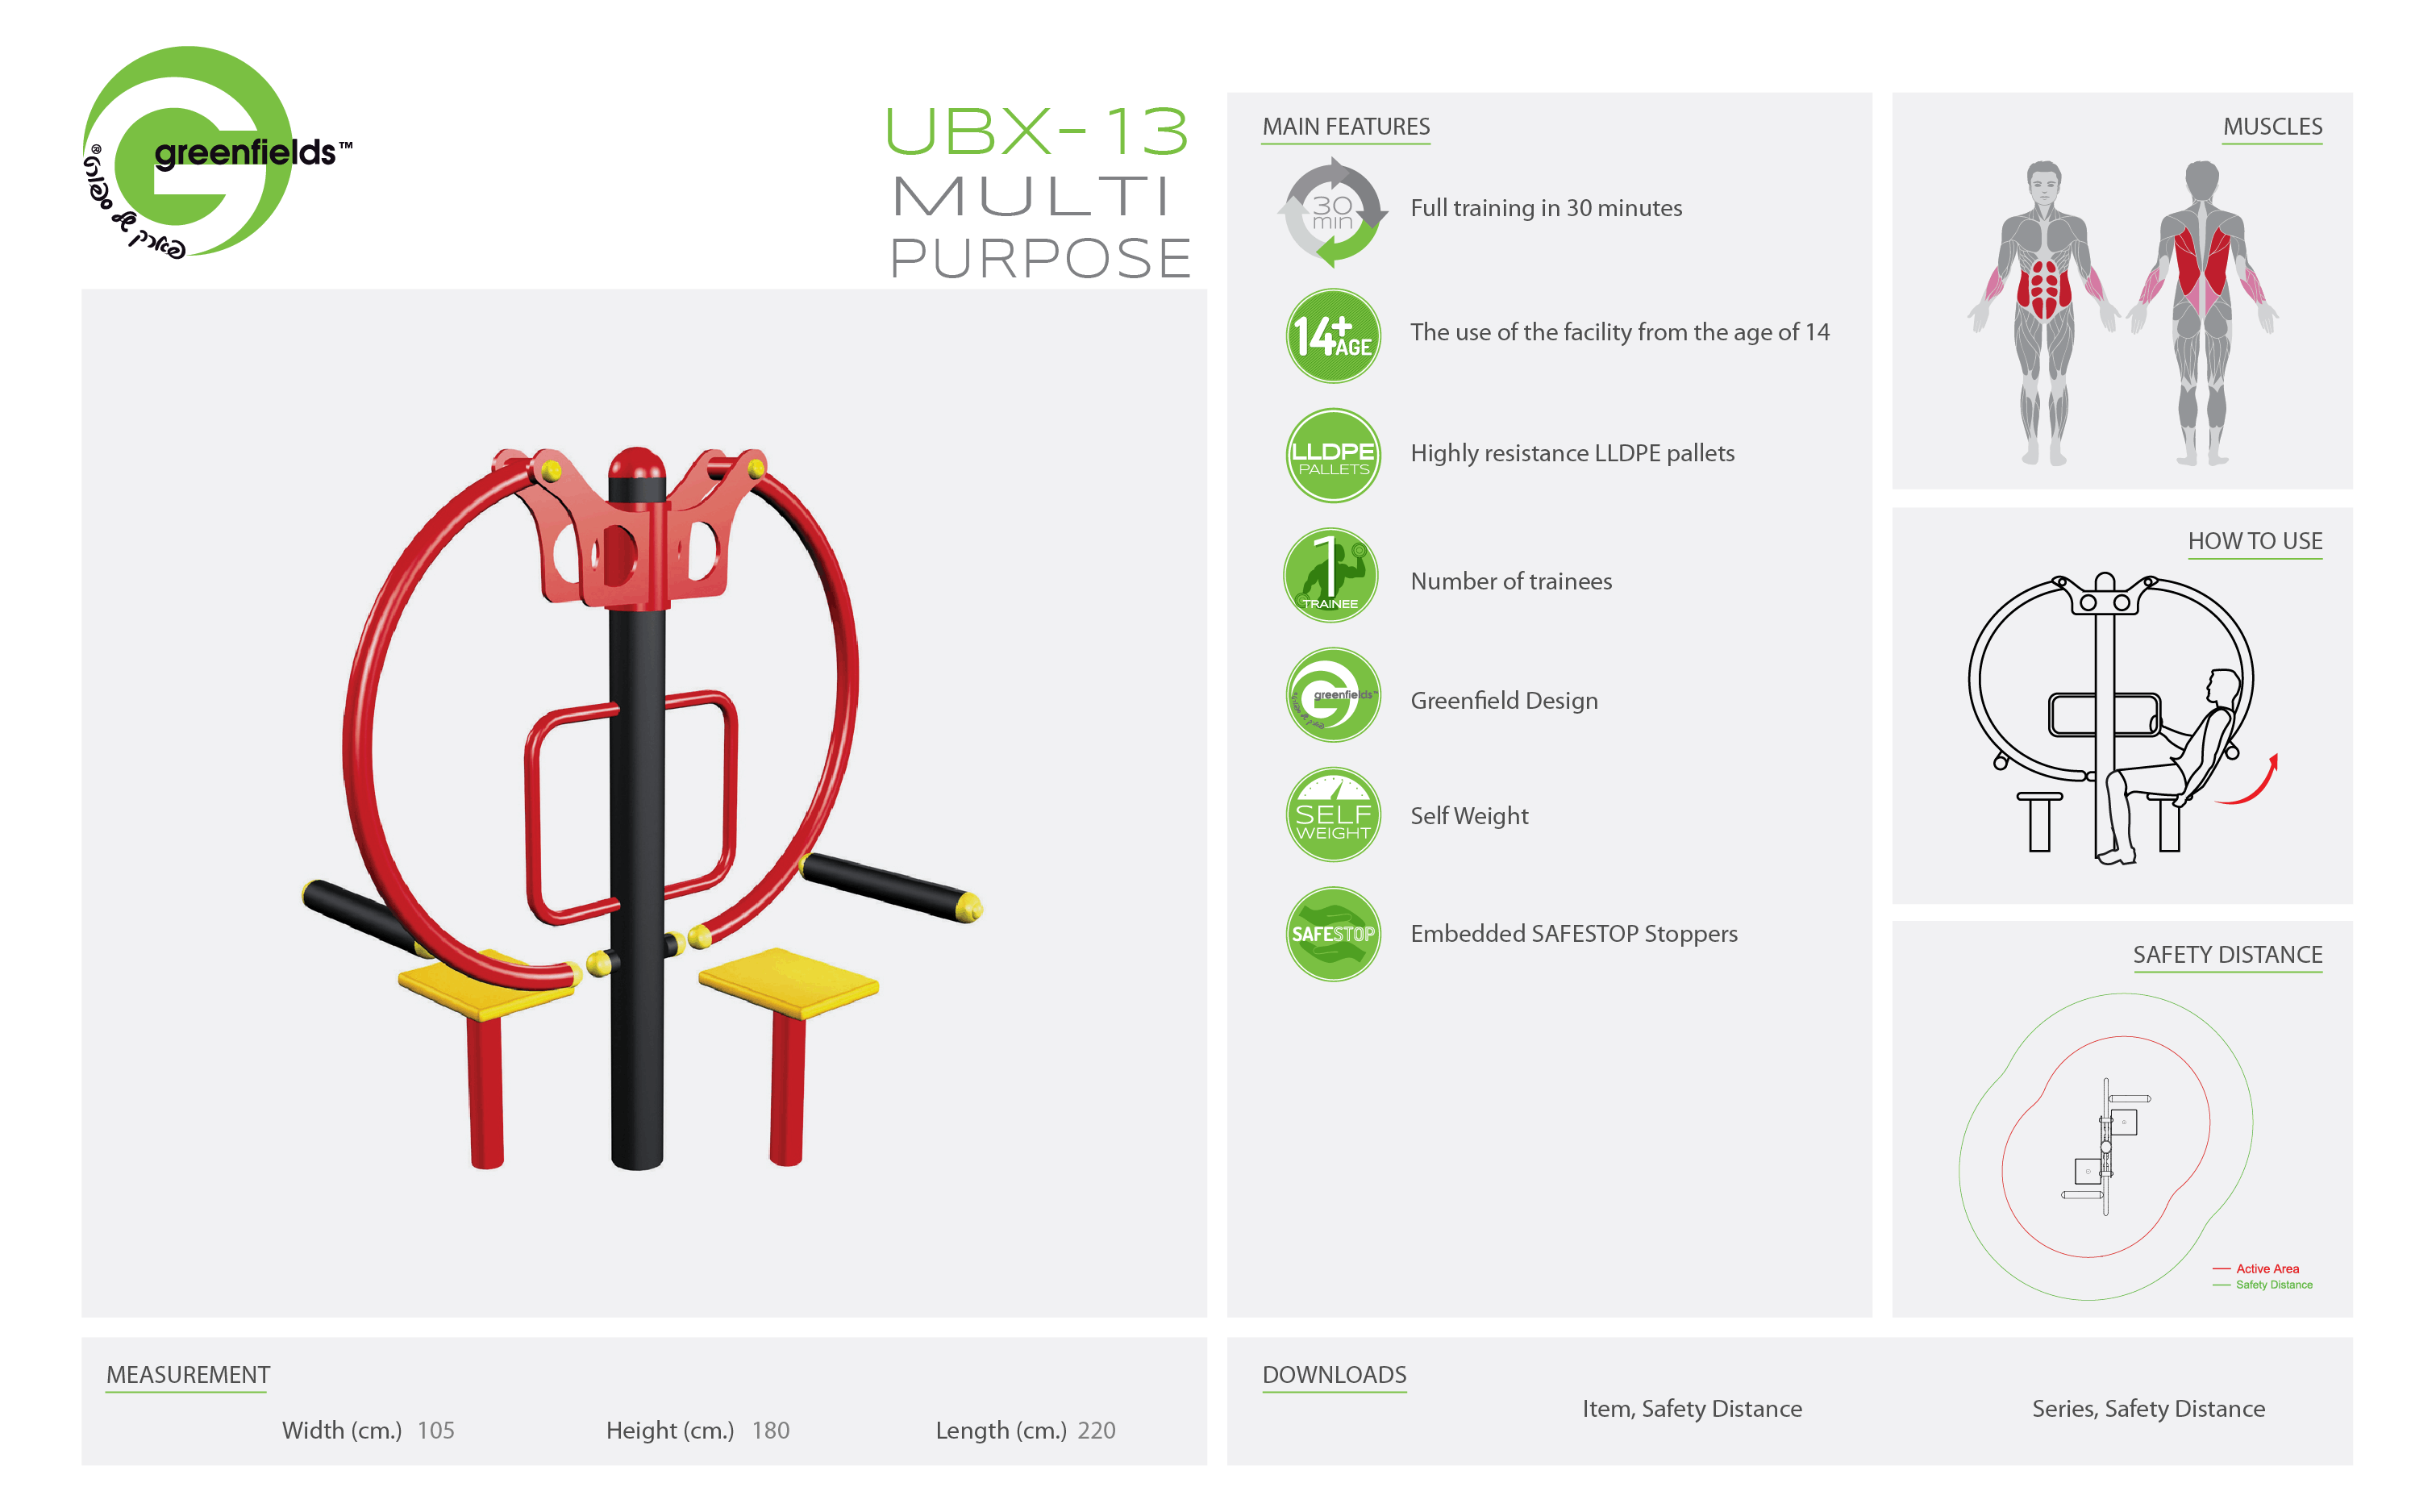 ubx-13 multi purpose -  אורבניקס - מתקן כושר - רב תכליתי